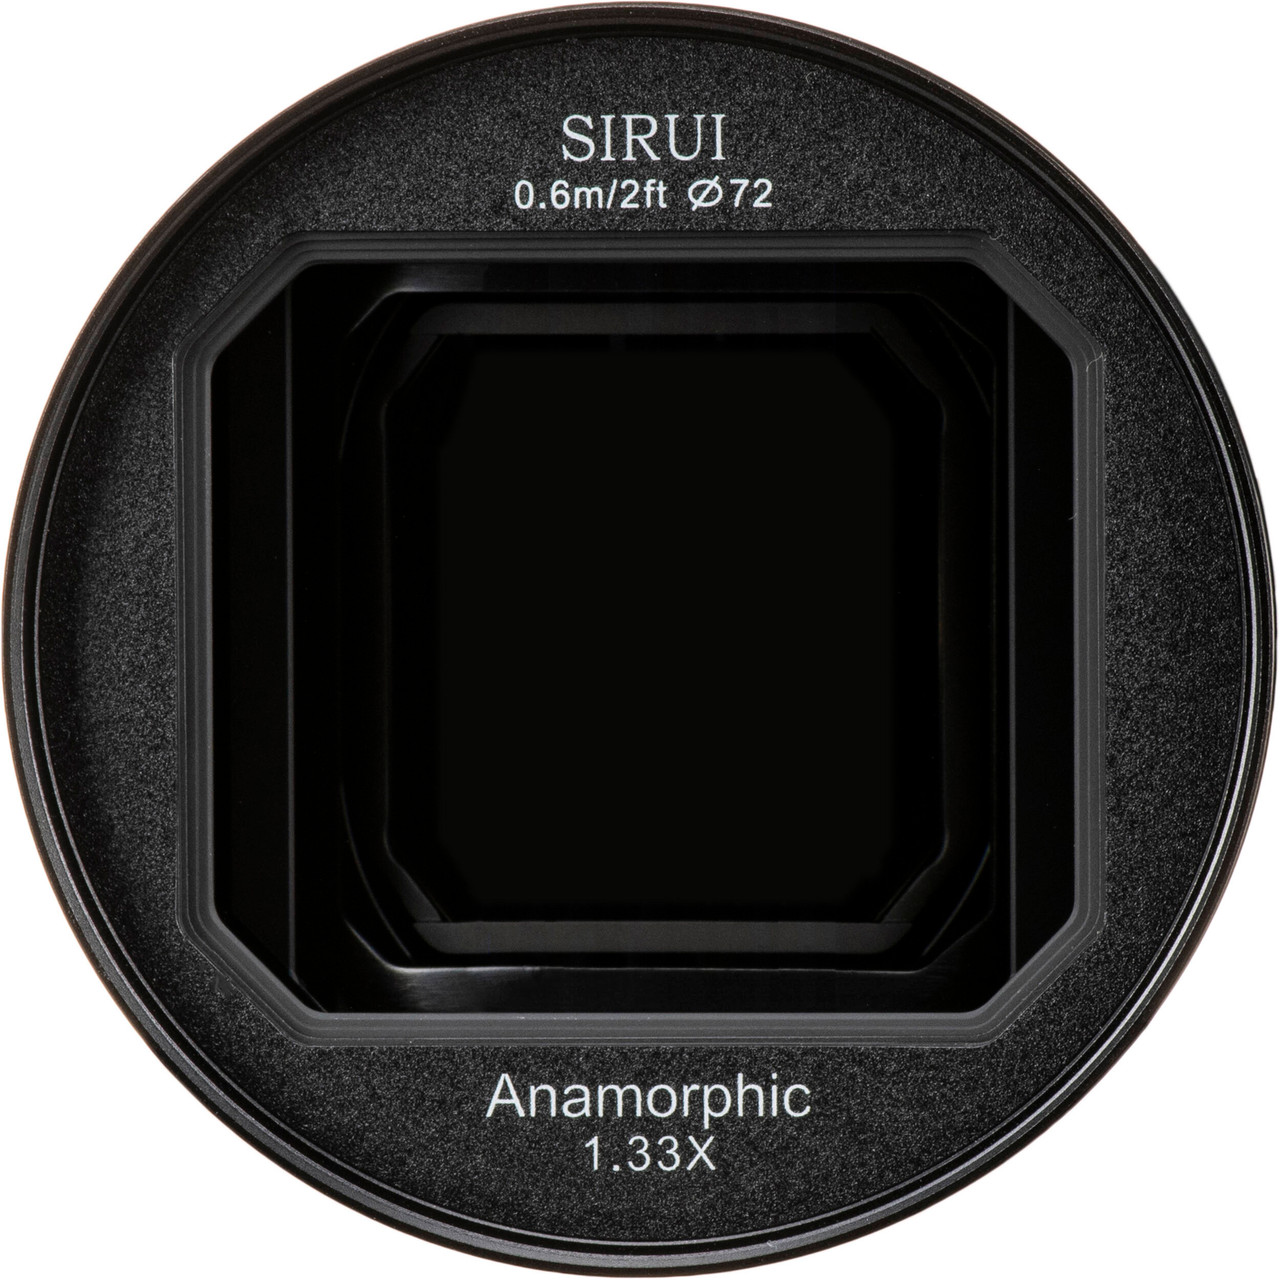 Sirui 24mm f/2.8 Anamorphic 1.33x Lens | Mojo Computers